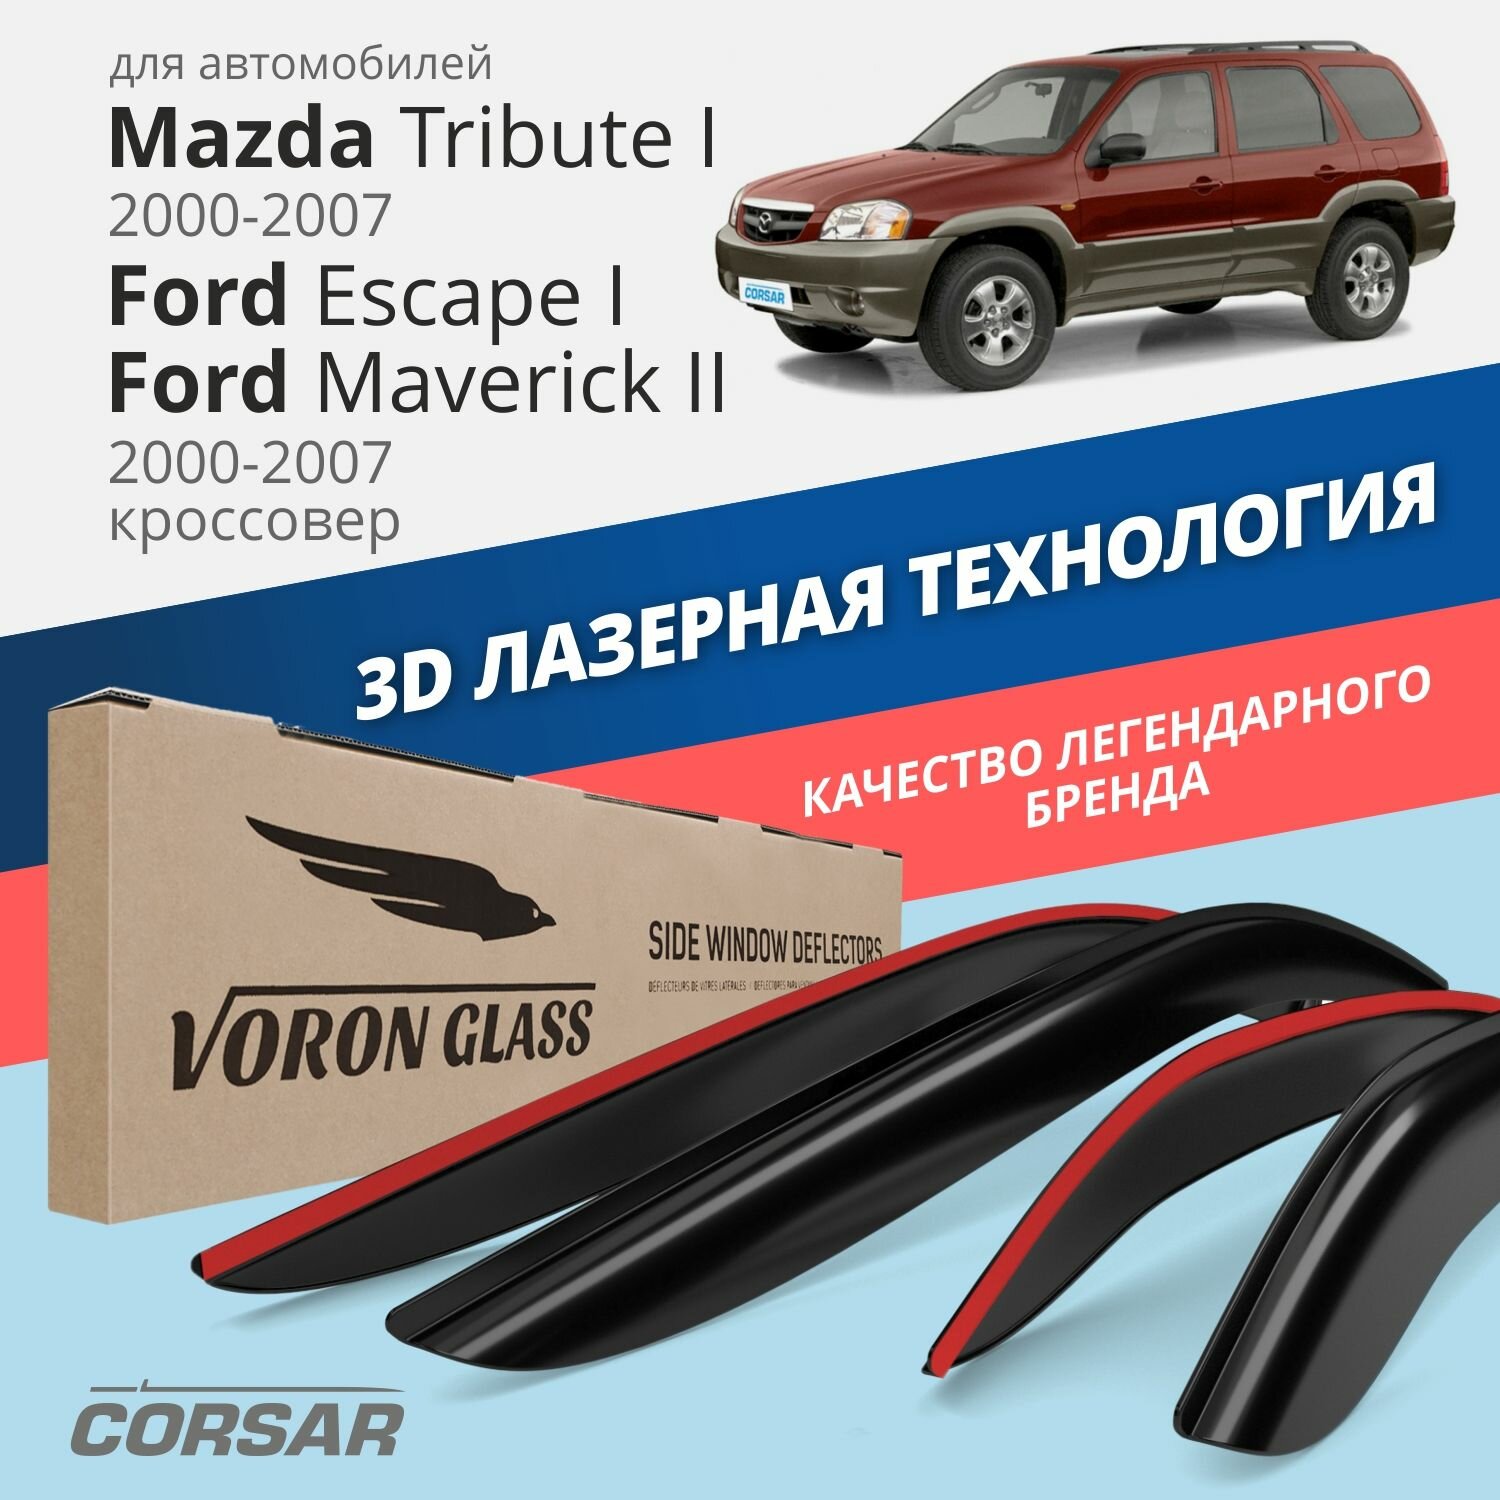 Дефлекторы окон Voron Glass серия Corsar для Mazda Tribute I /Ford Escape I /Ford Maverick II /2000-2007 накладные 4 шт.